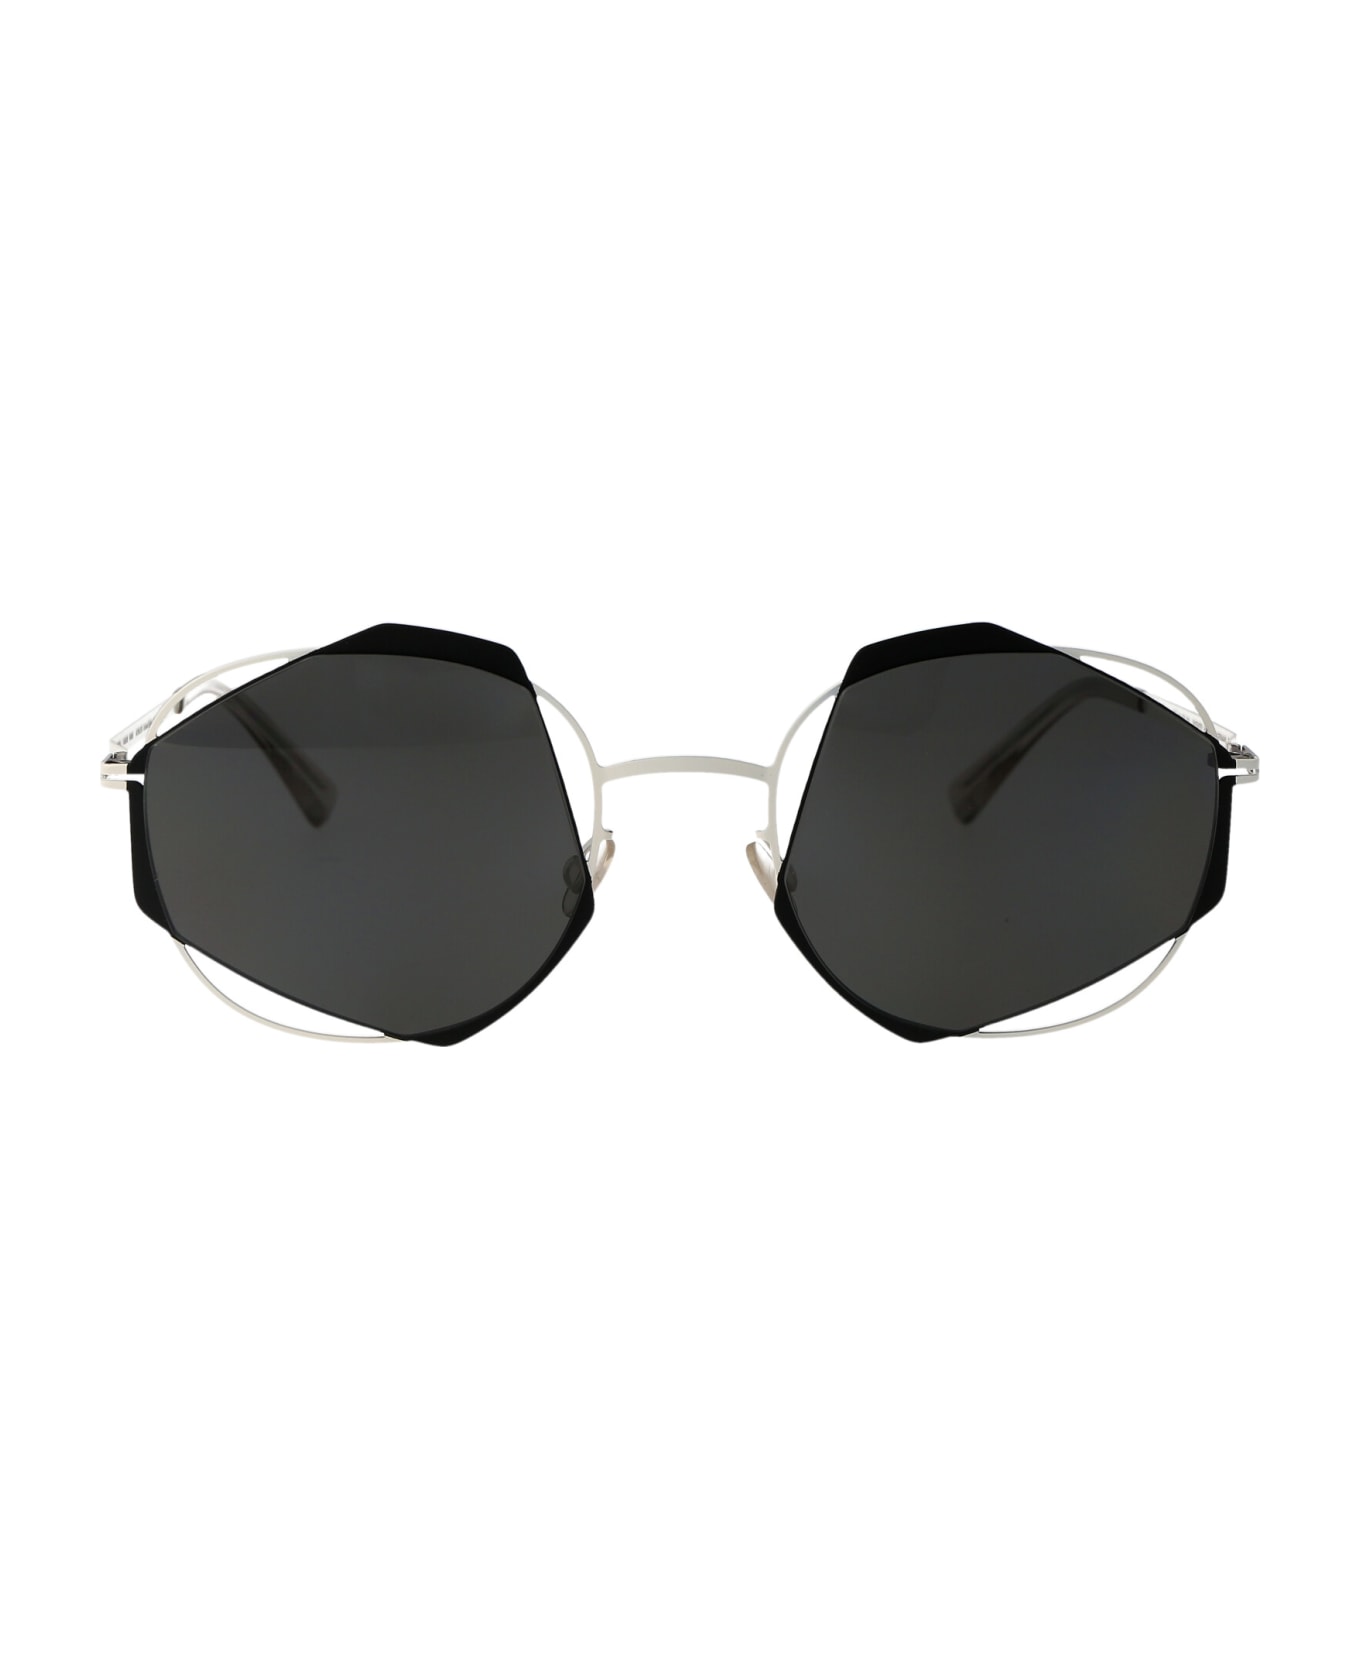 Mykita Achilles Sunglasses - 424 Antique White/Black Darkgrey Solid 